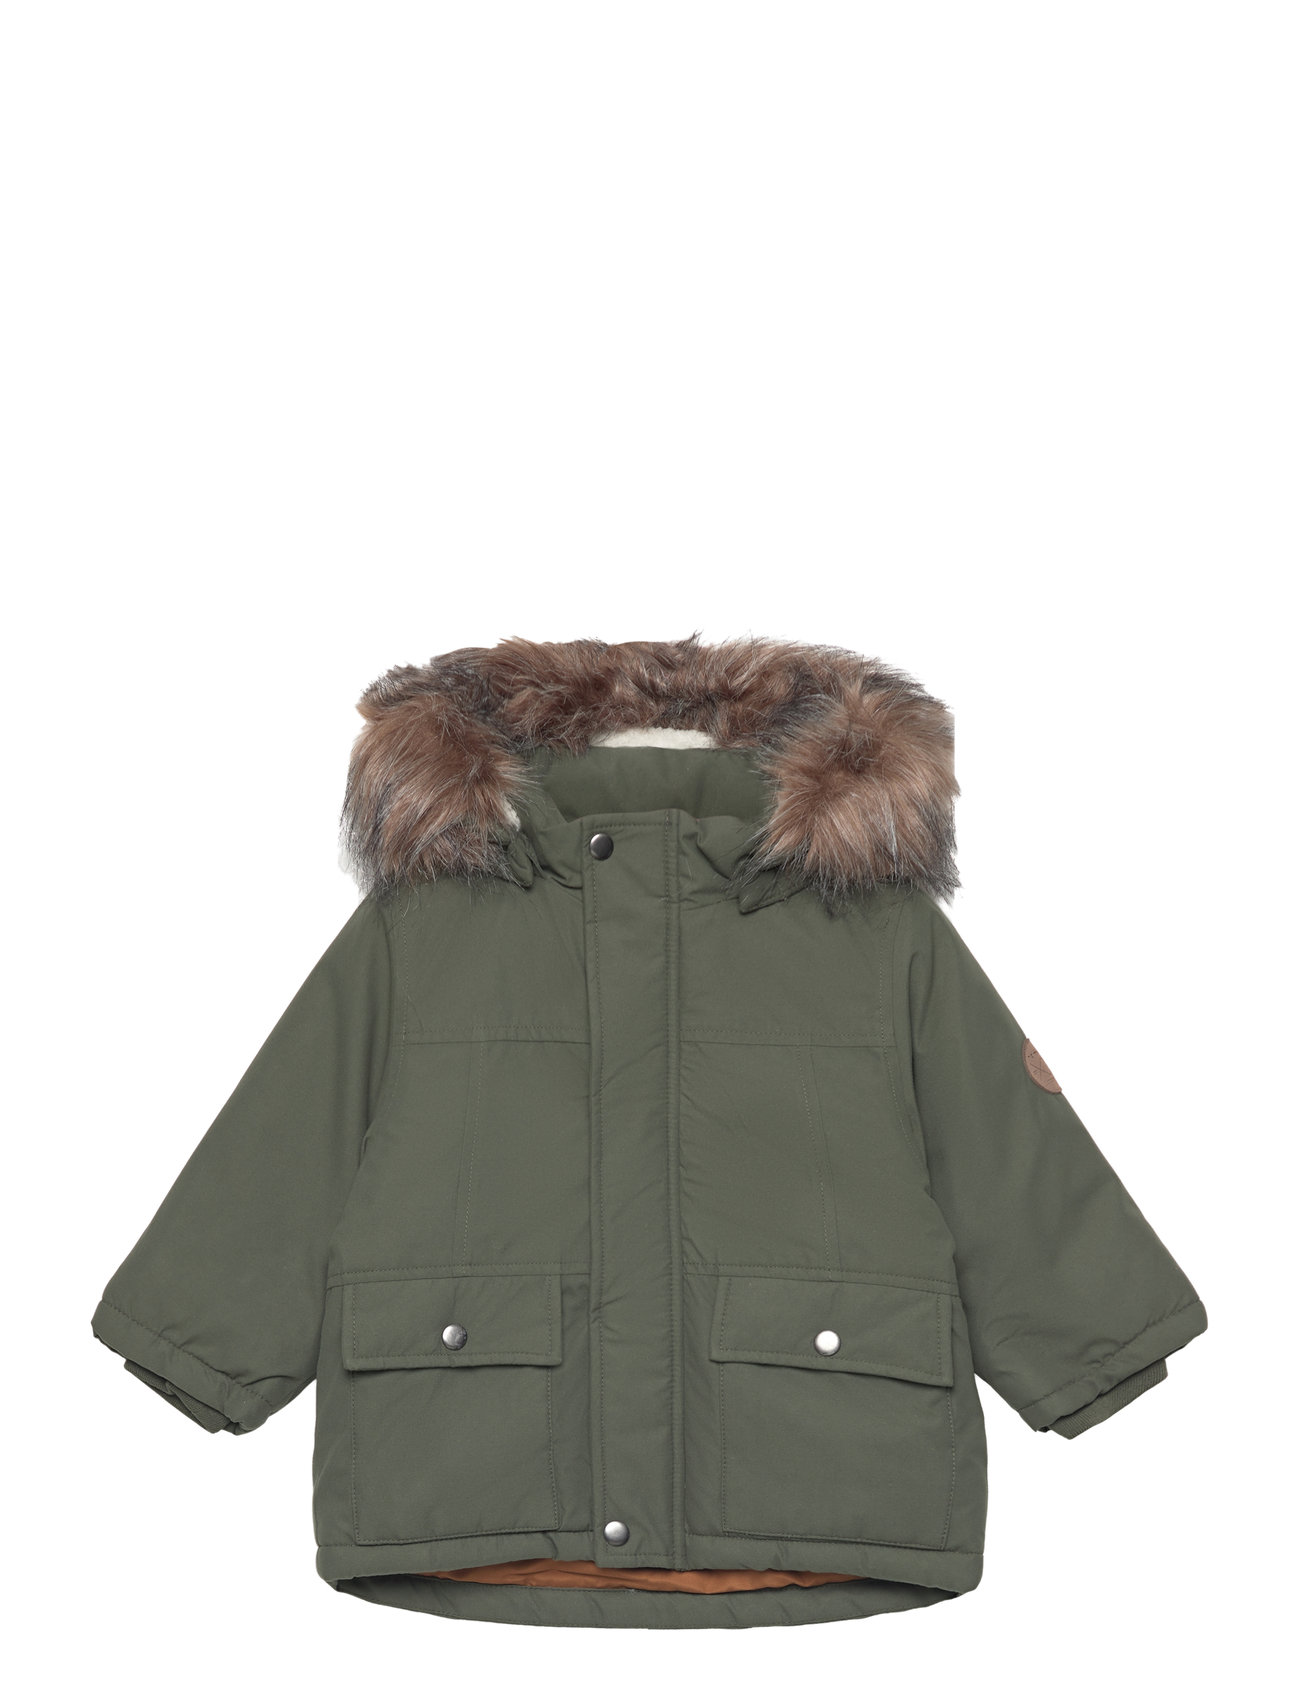 name Parka shop Fo Booztlet jackets – Pb it – at Jacket Nmmmarlin